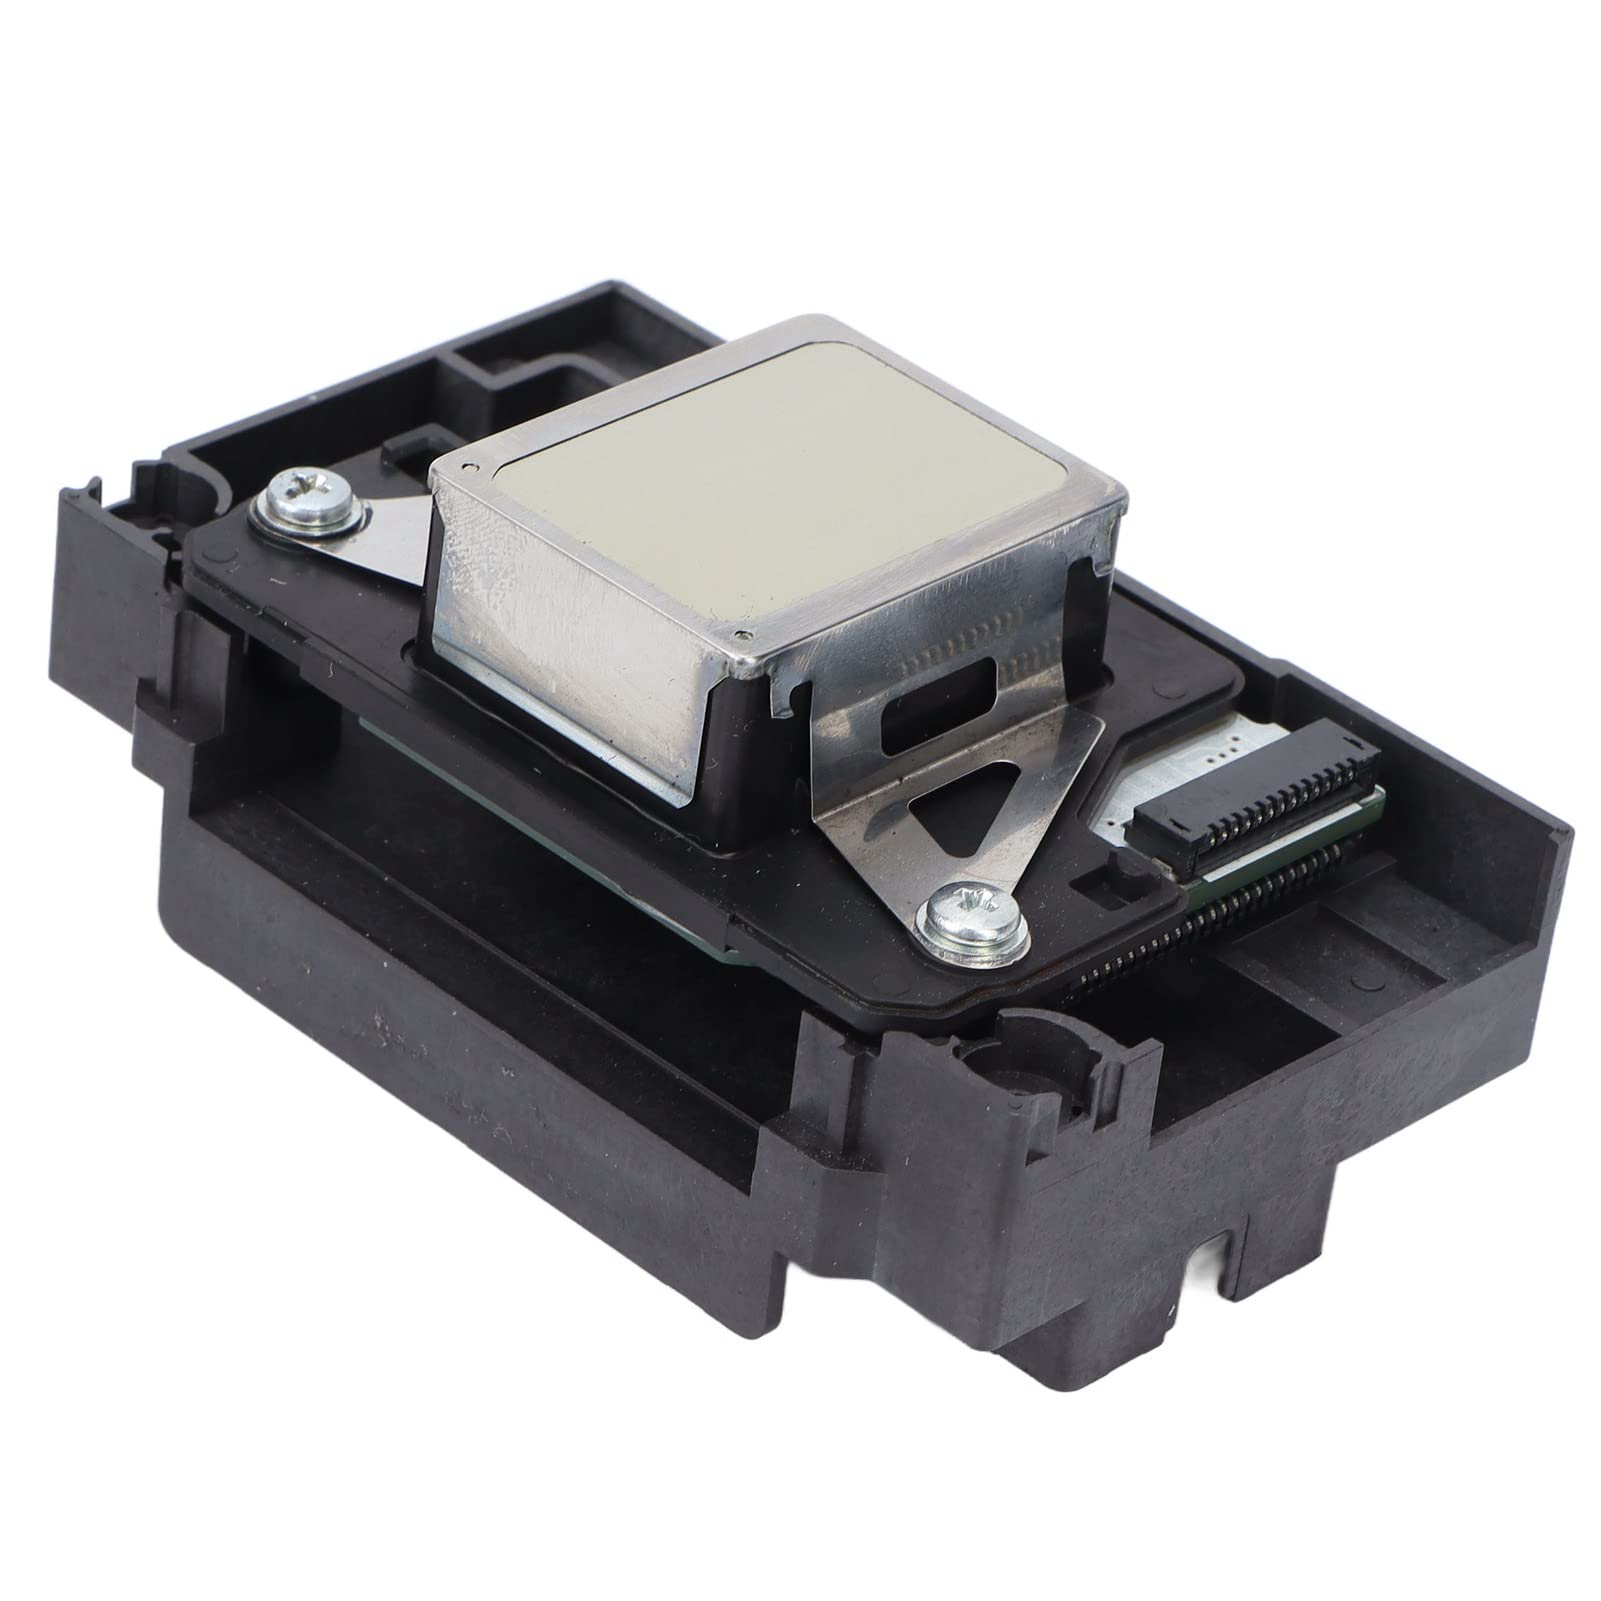 Printer Head Replacement for Epson L801 L800 L805 L850 T50 T60 R290 RX610 690 R200 R210 R220 R300 R310 R340 R350, Printer Sprinkler Update Accessories